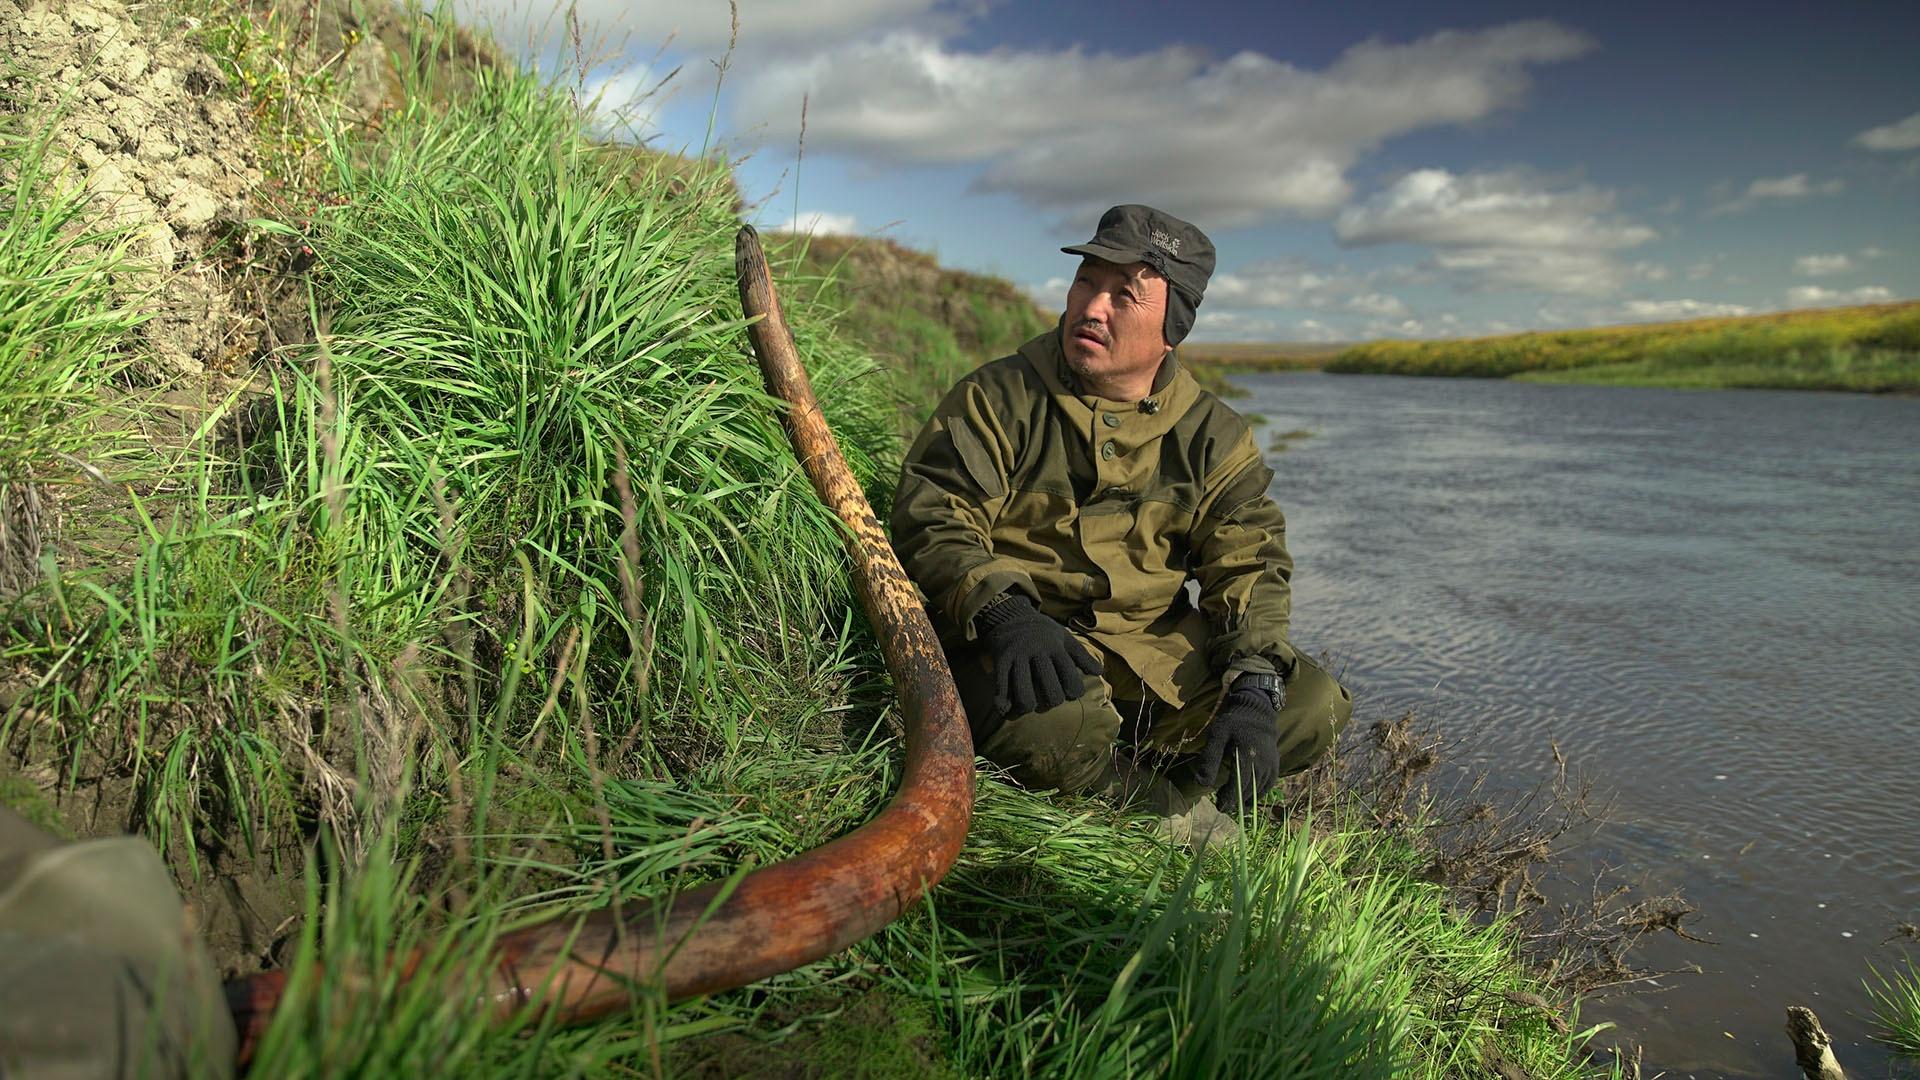 Anton Maleodrov, Mammoth tusk hunter, in Siberian permafrost.